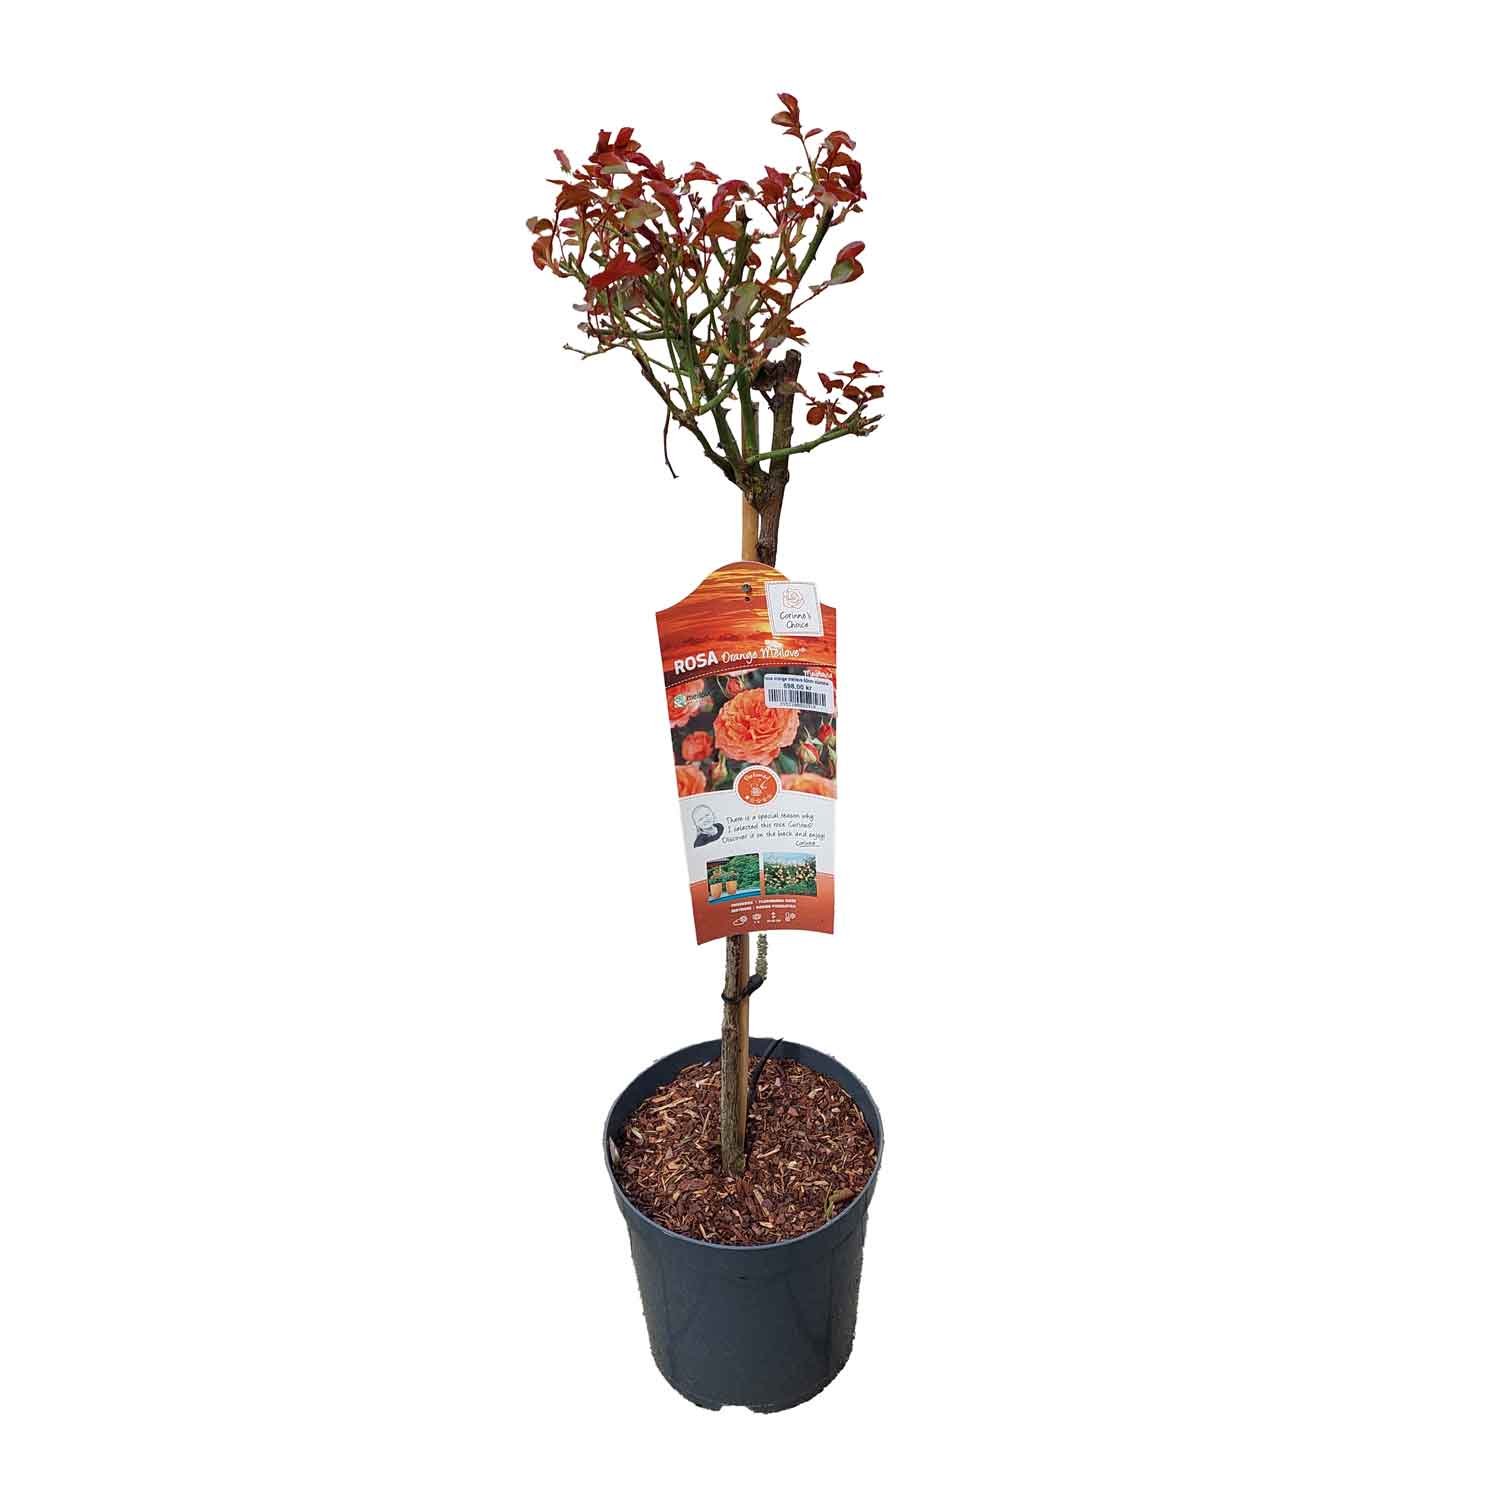 Rosa orange meilove 60cm stamme